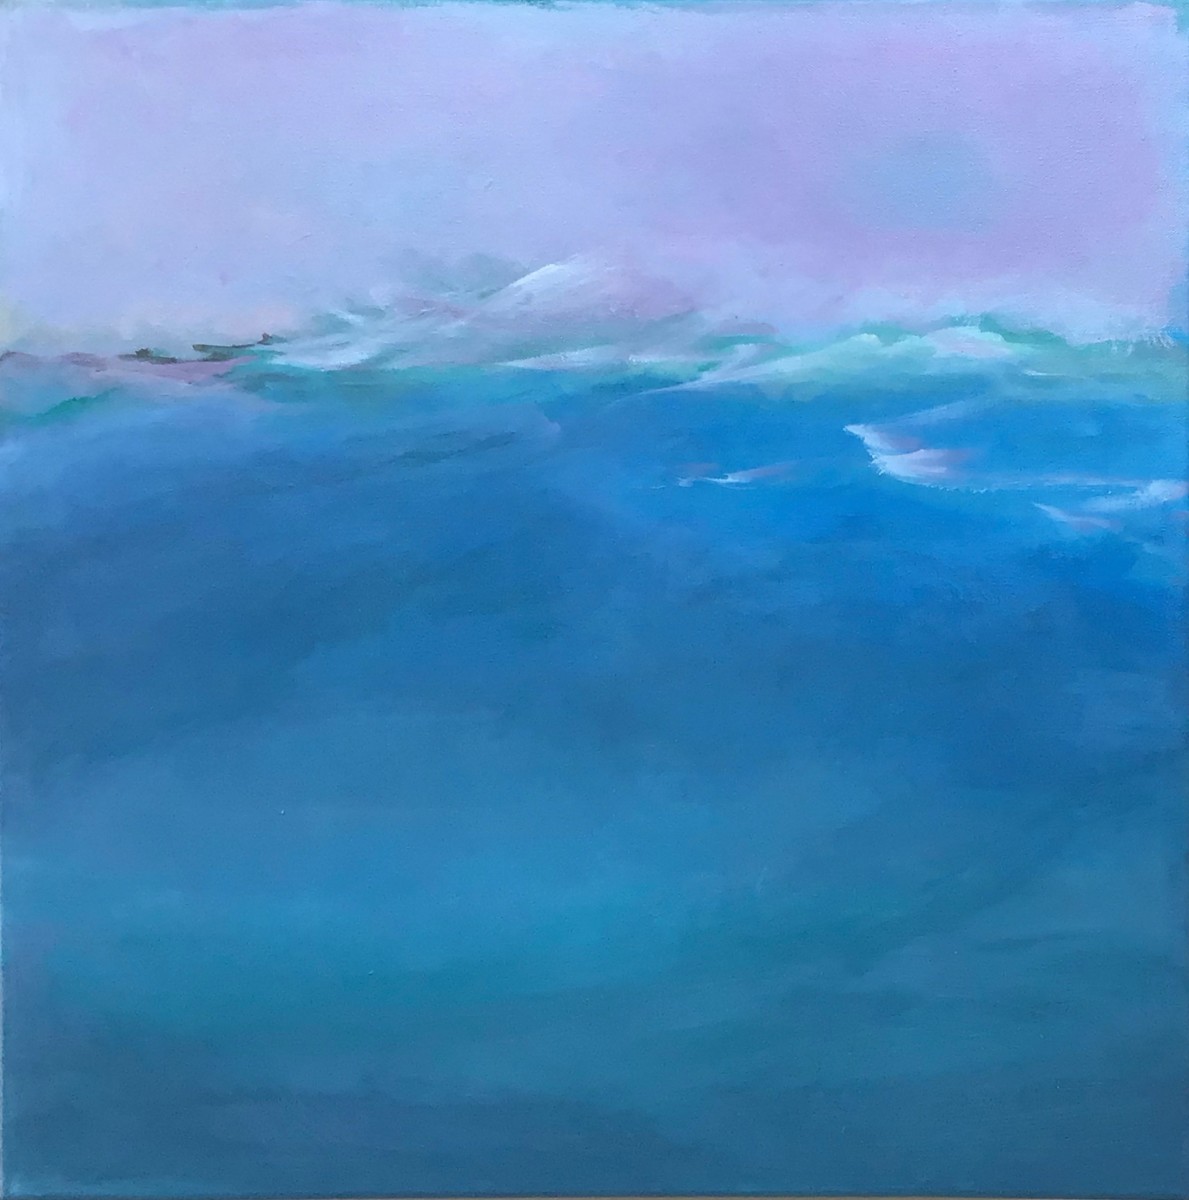 The Sea sighs by Rose Bonacorsi 